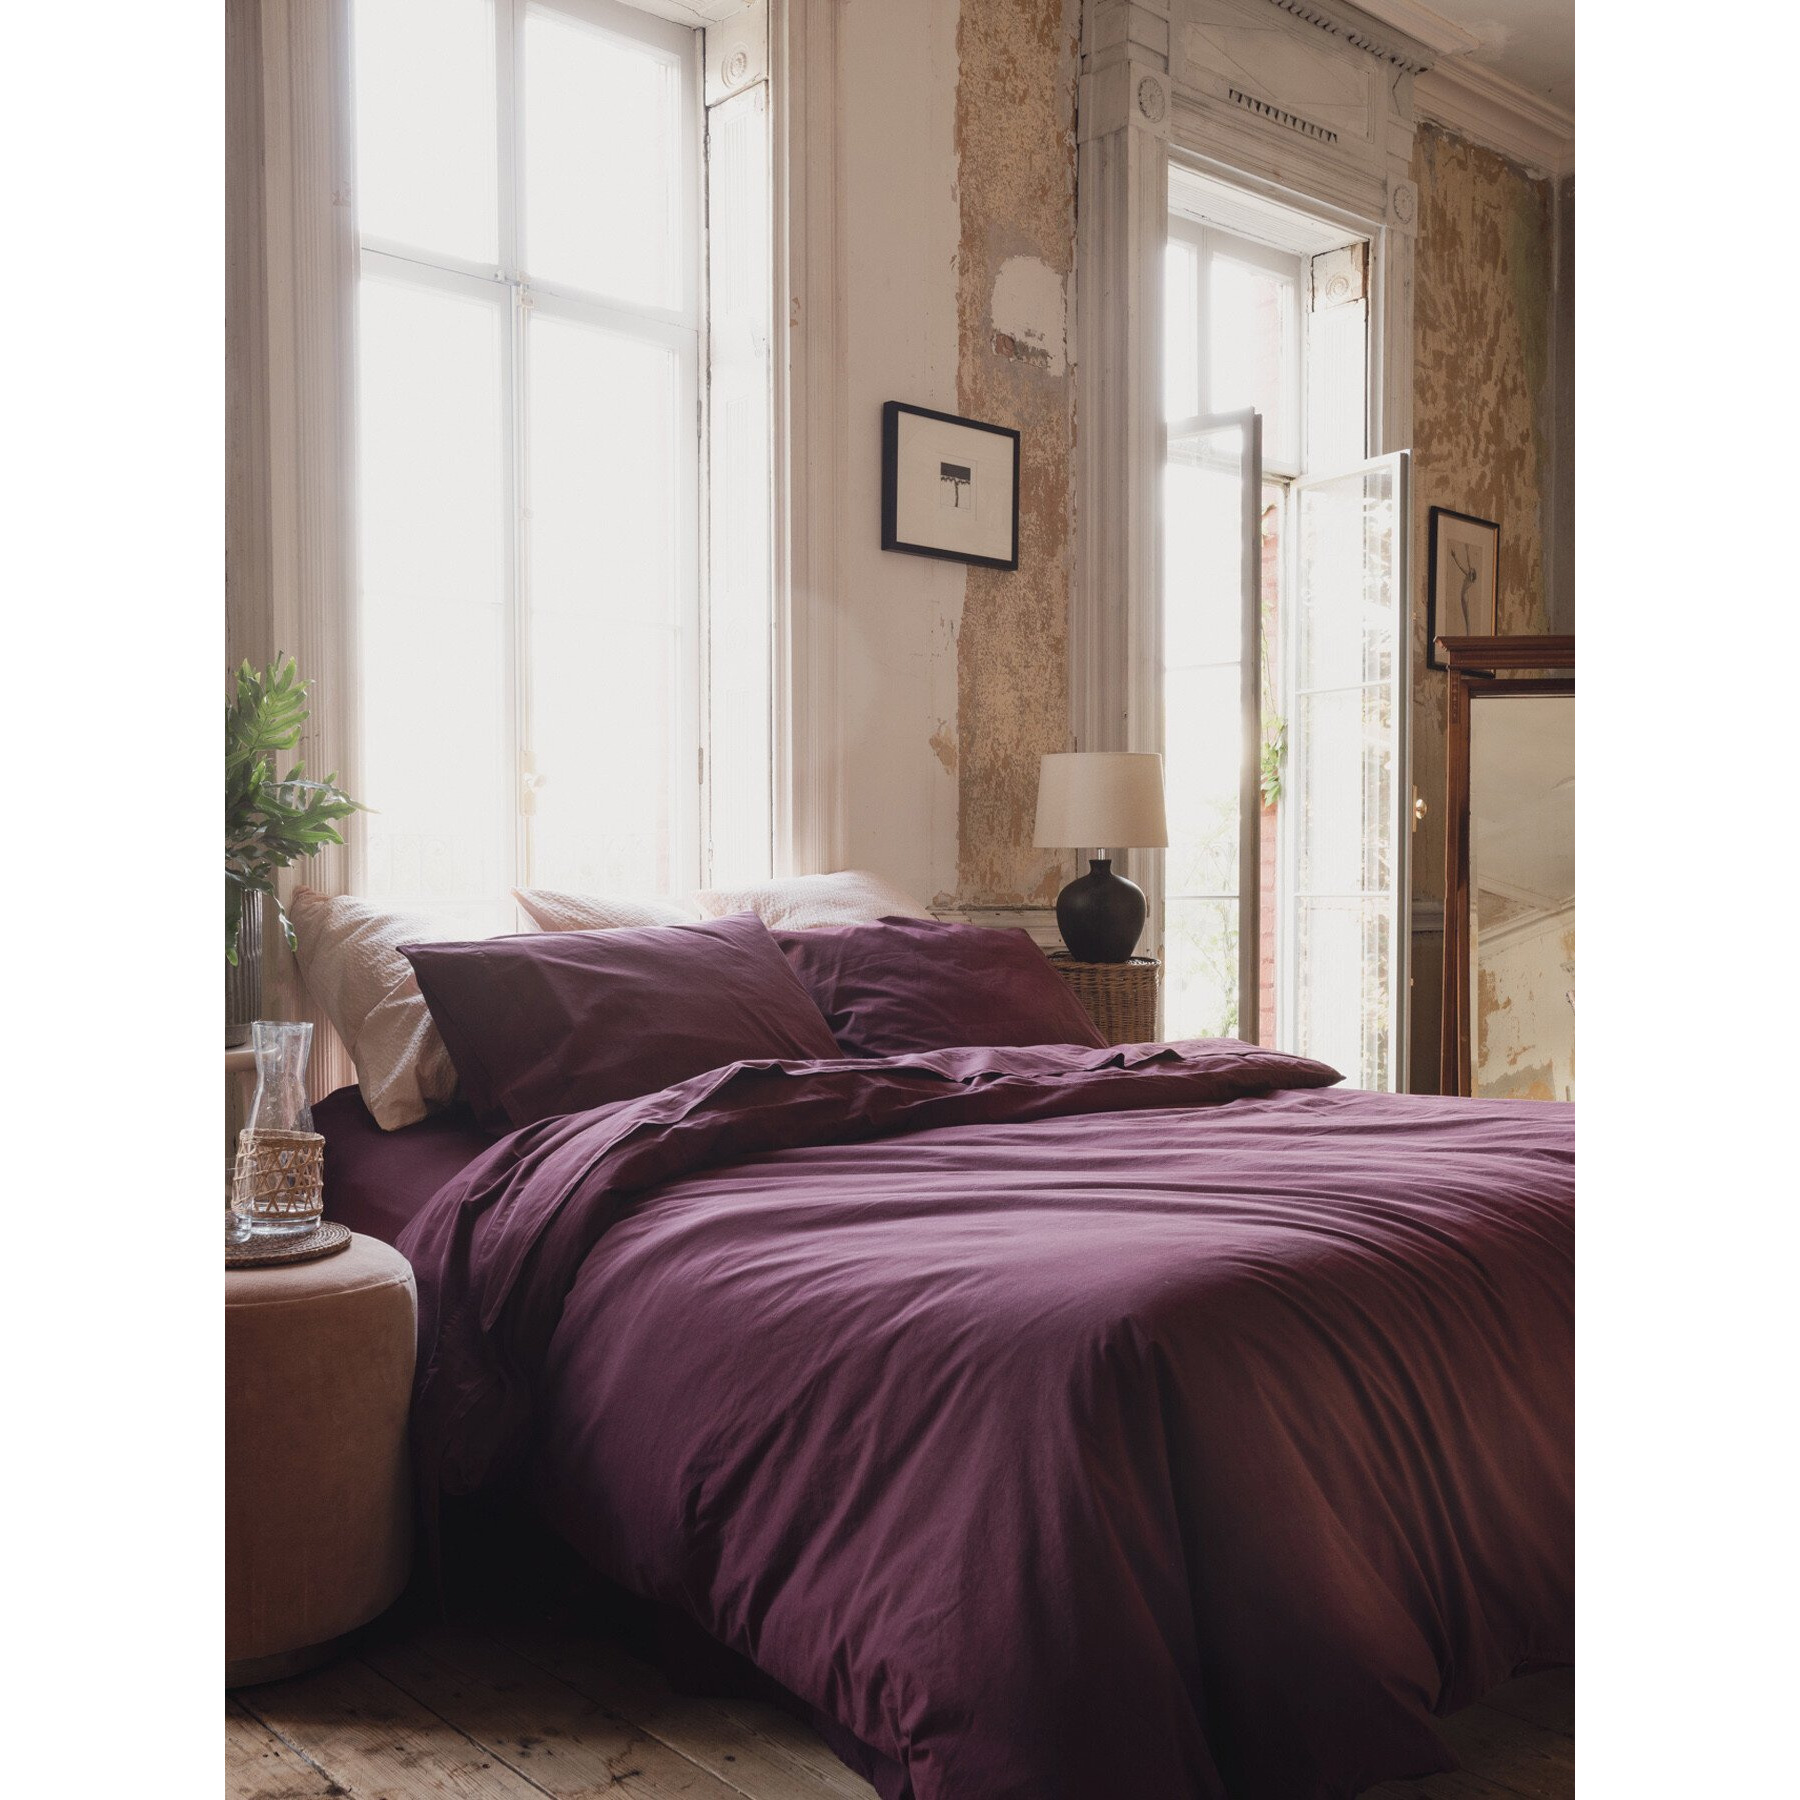 Piglet in Bed Plain Cotton Flat Sheet - Size King Purple - image 1